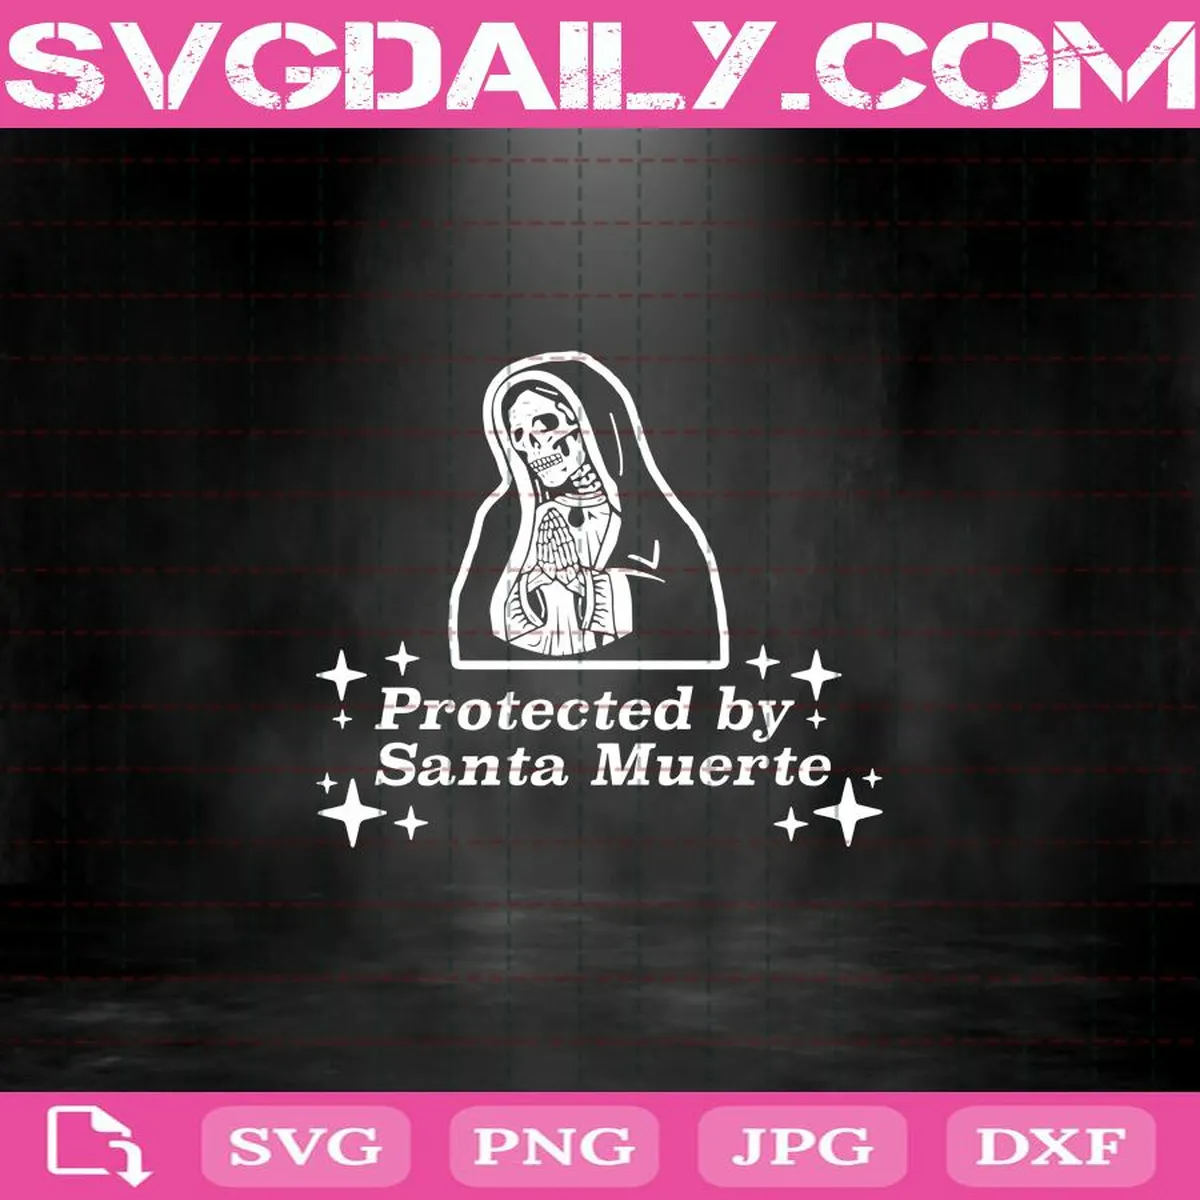 Protected By Santa Muerte Svg, Santa Muerte Svg, Files For Silhouette Files For Cricut Svg Dxf Eps Png Instant Download